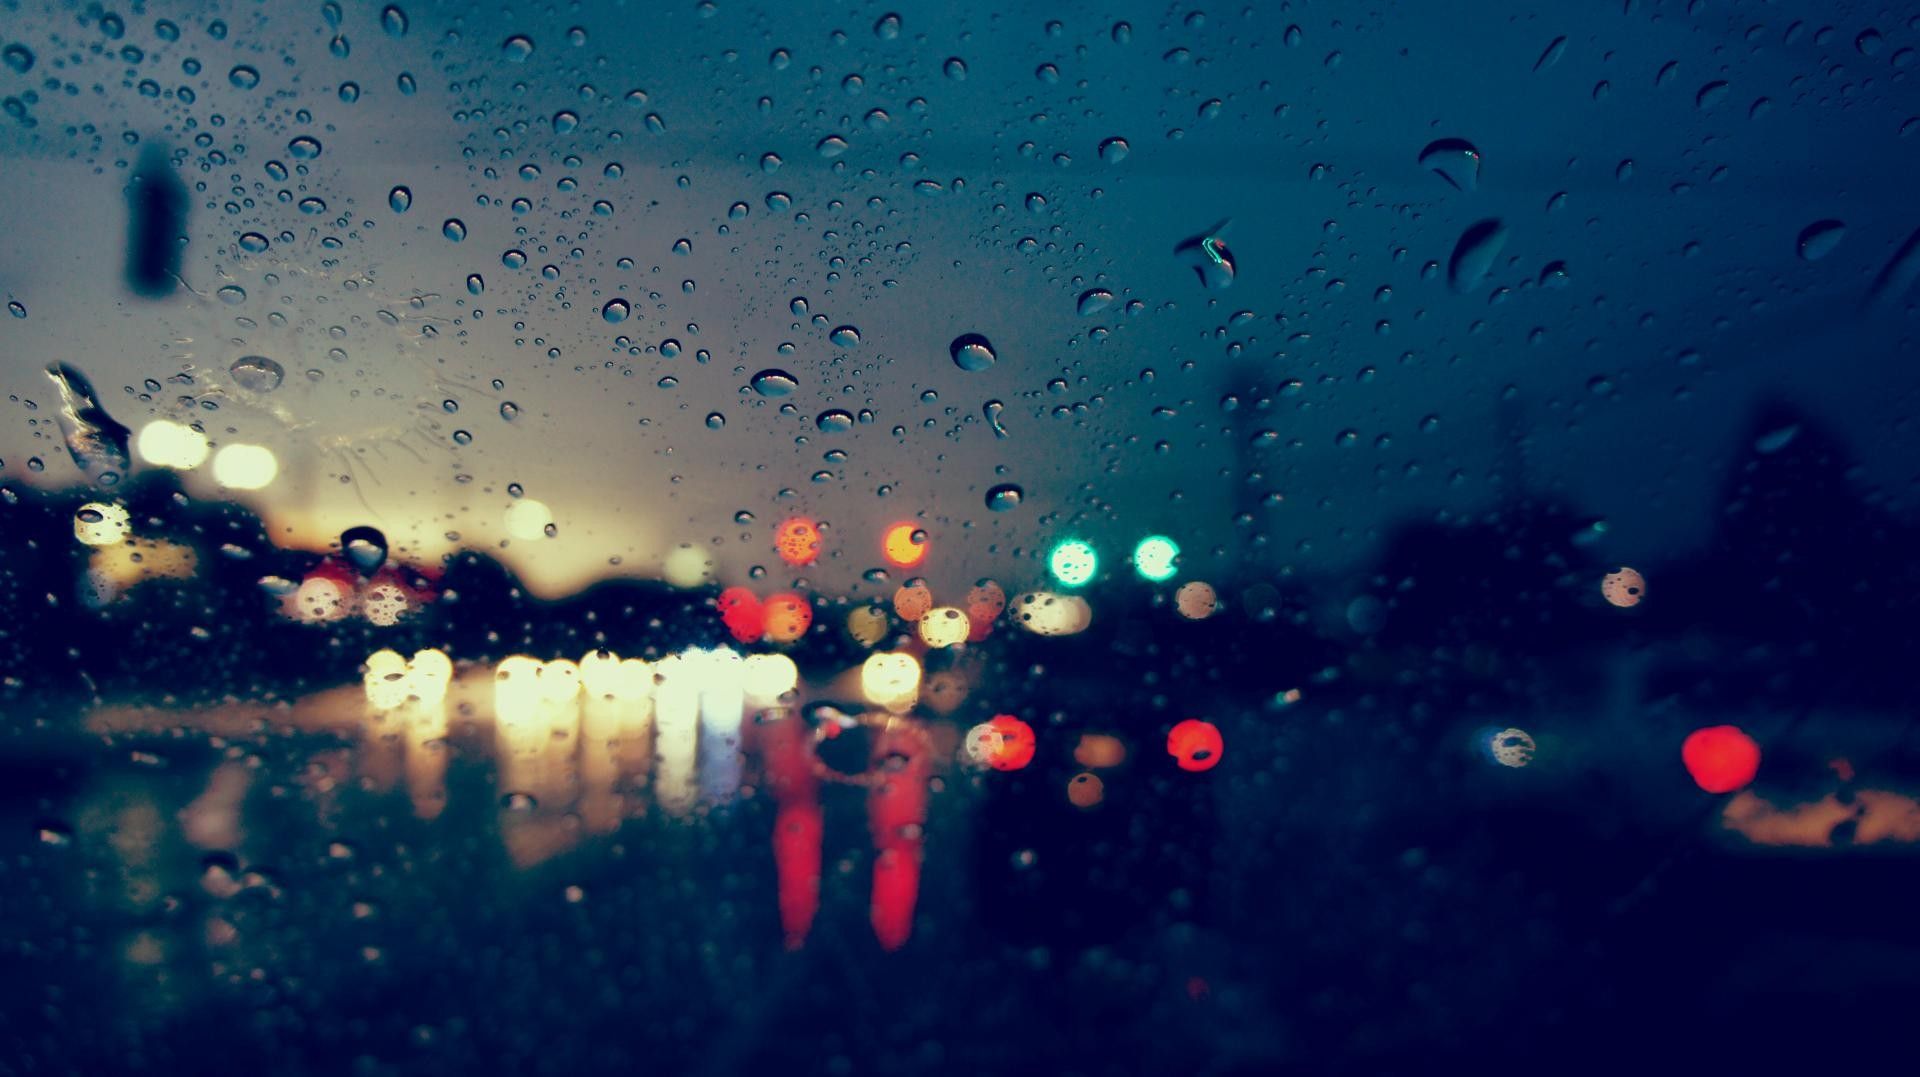 #urban, #street, #rain, #bokeh, #water drops, #lights